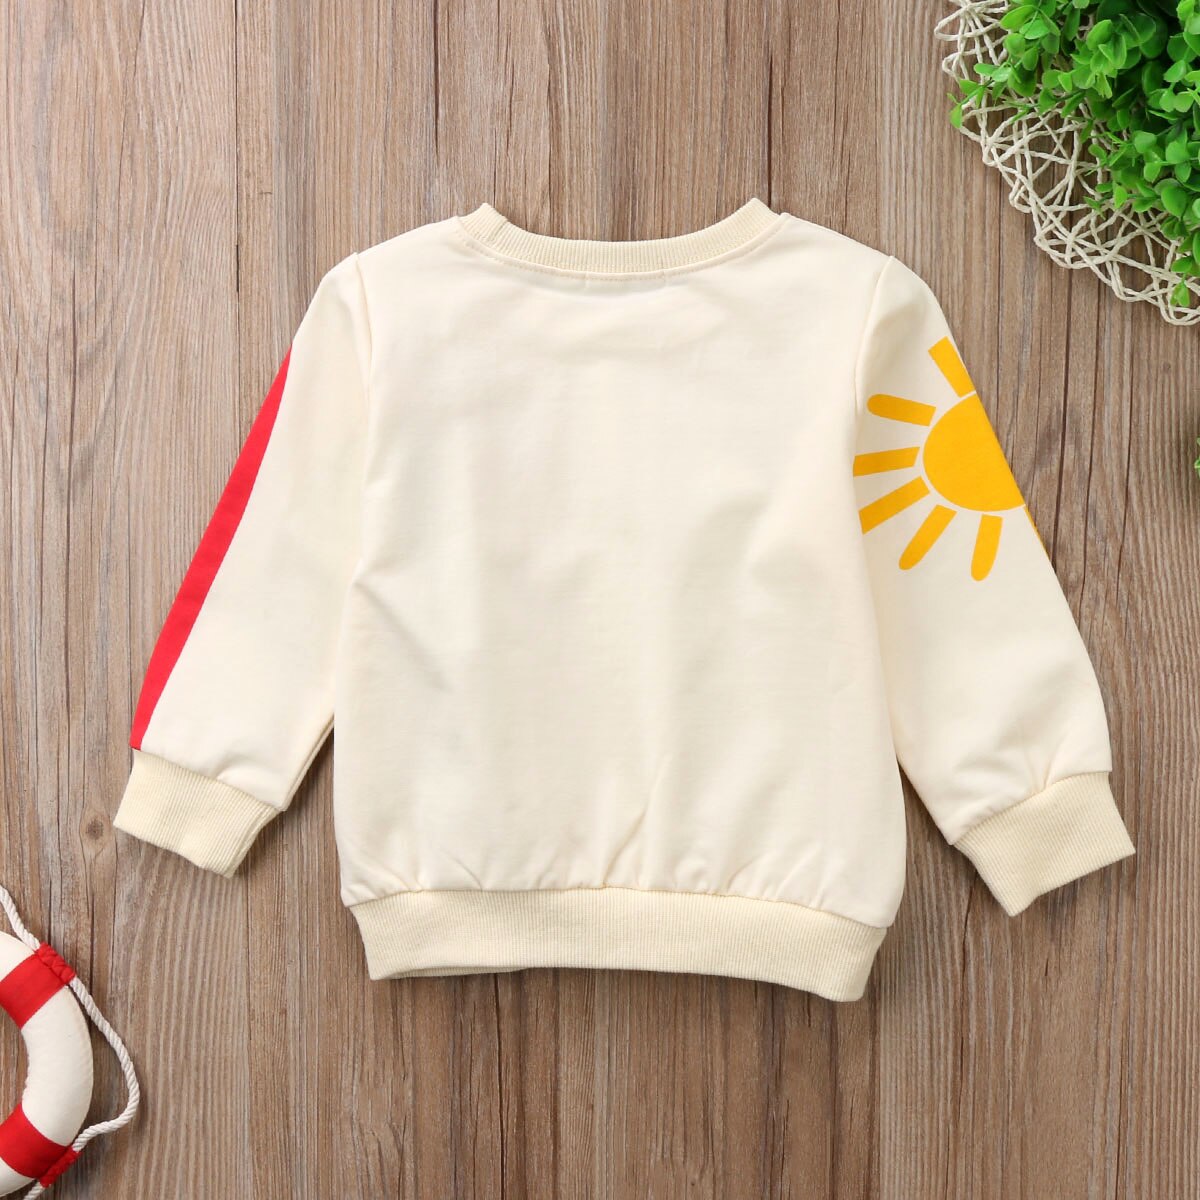 Sød baby sweater frynsede regnbue sol sweatshirt baby piger børn regnbue solskin t-shirt tøj bluse sweatshirt cardigan